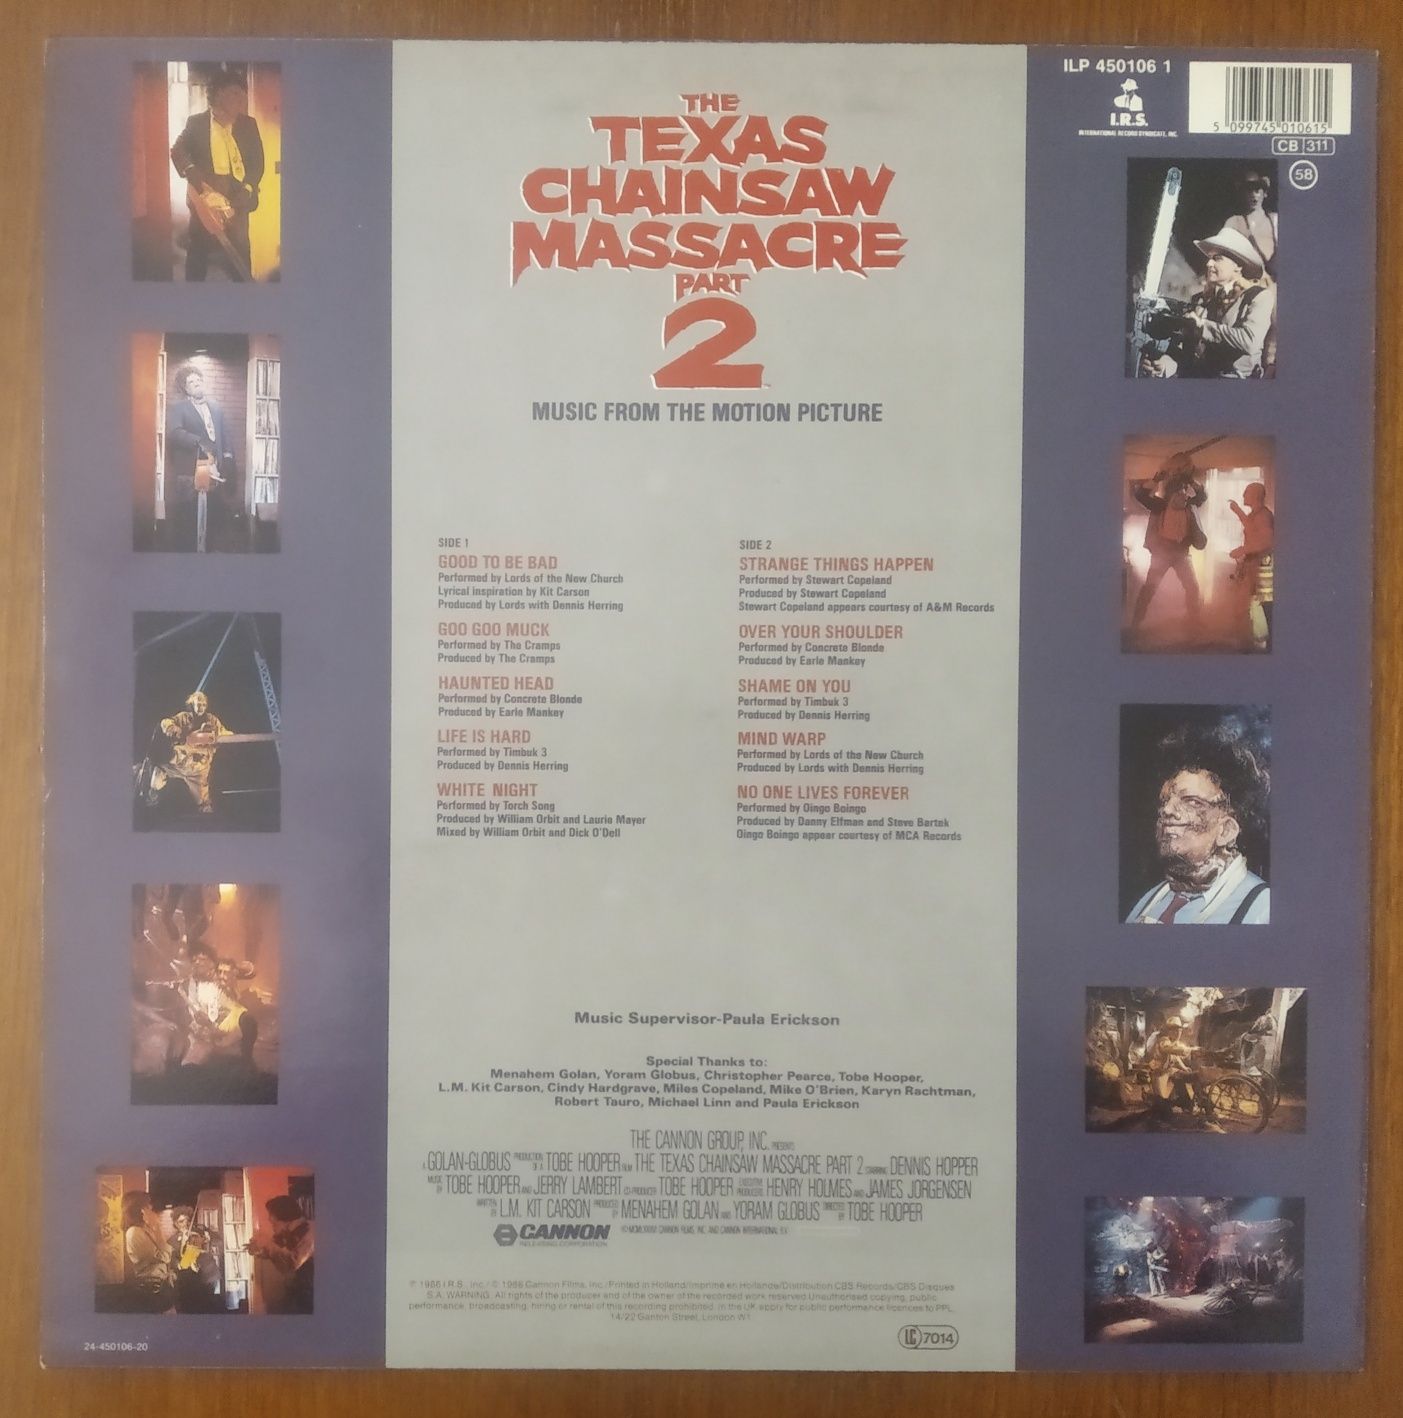 Disco de vinil OST do filme "The Texas Chainsaw Massacre" Part 2